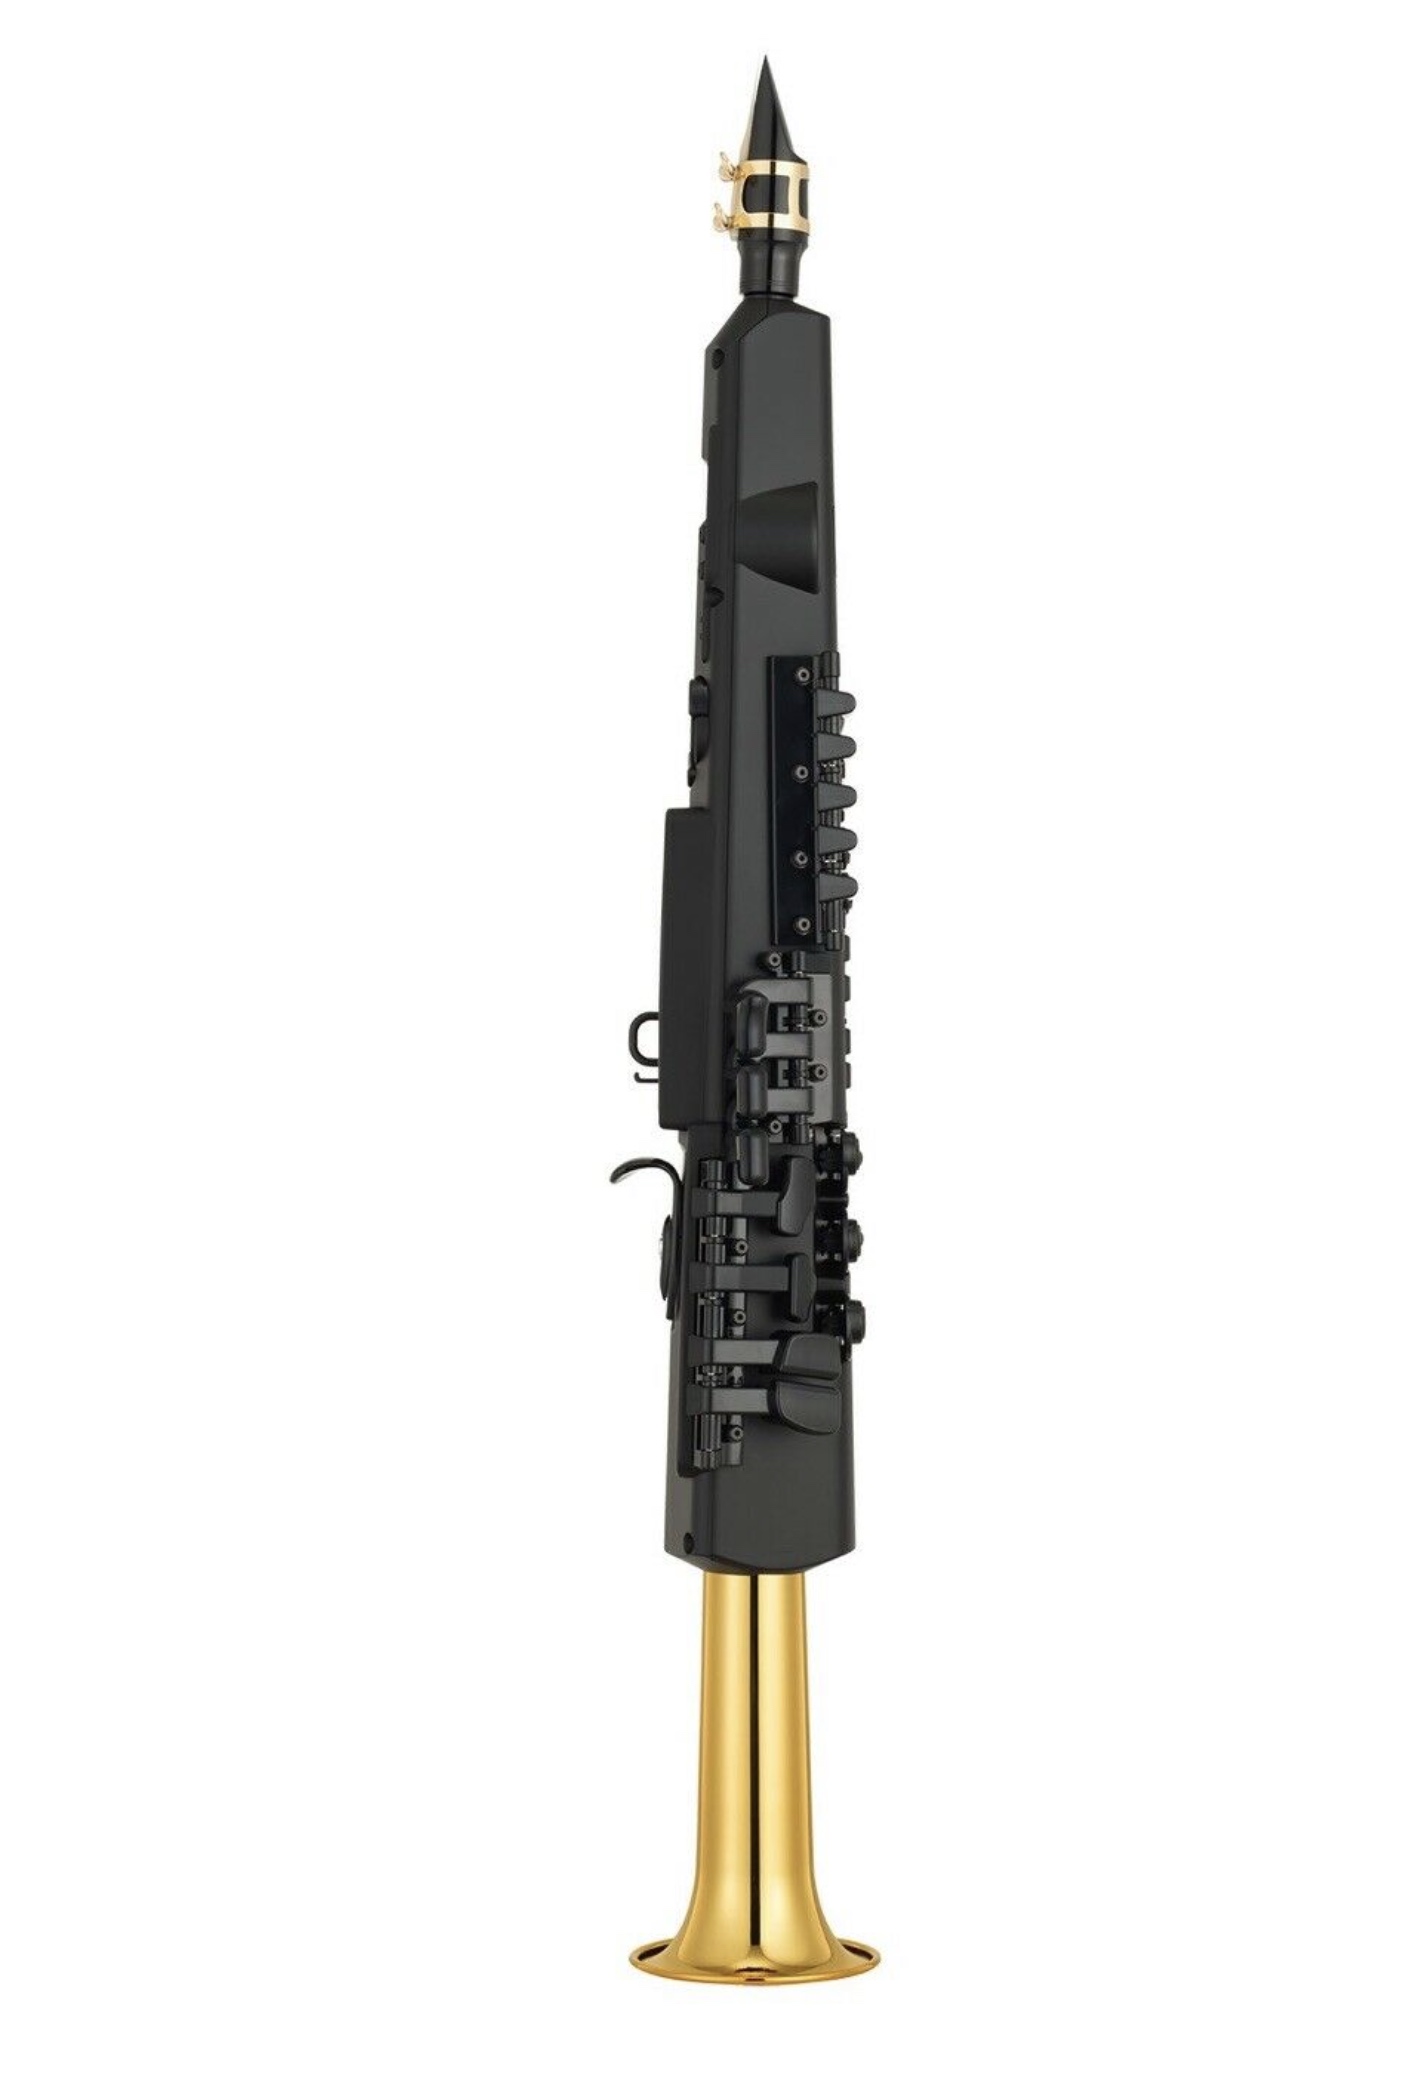 Yamaha YDS-150 Digital Saxophone - In stock now! - www.GetASax.com